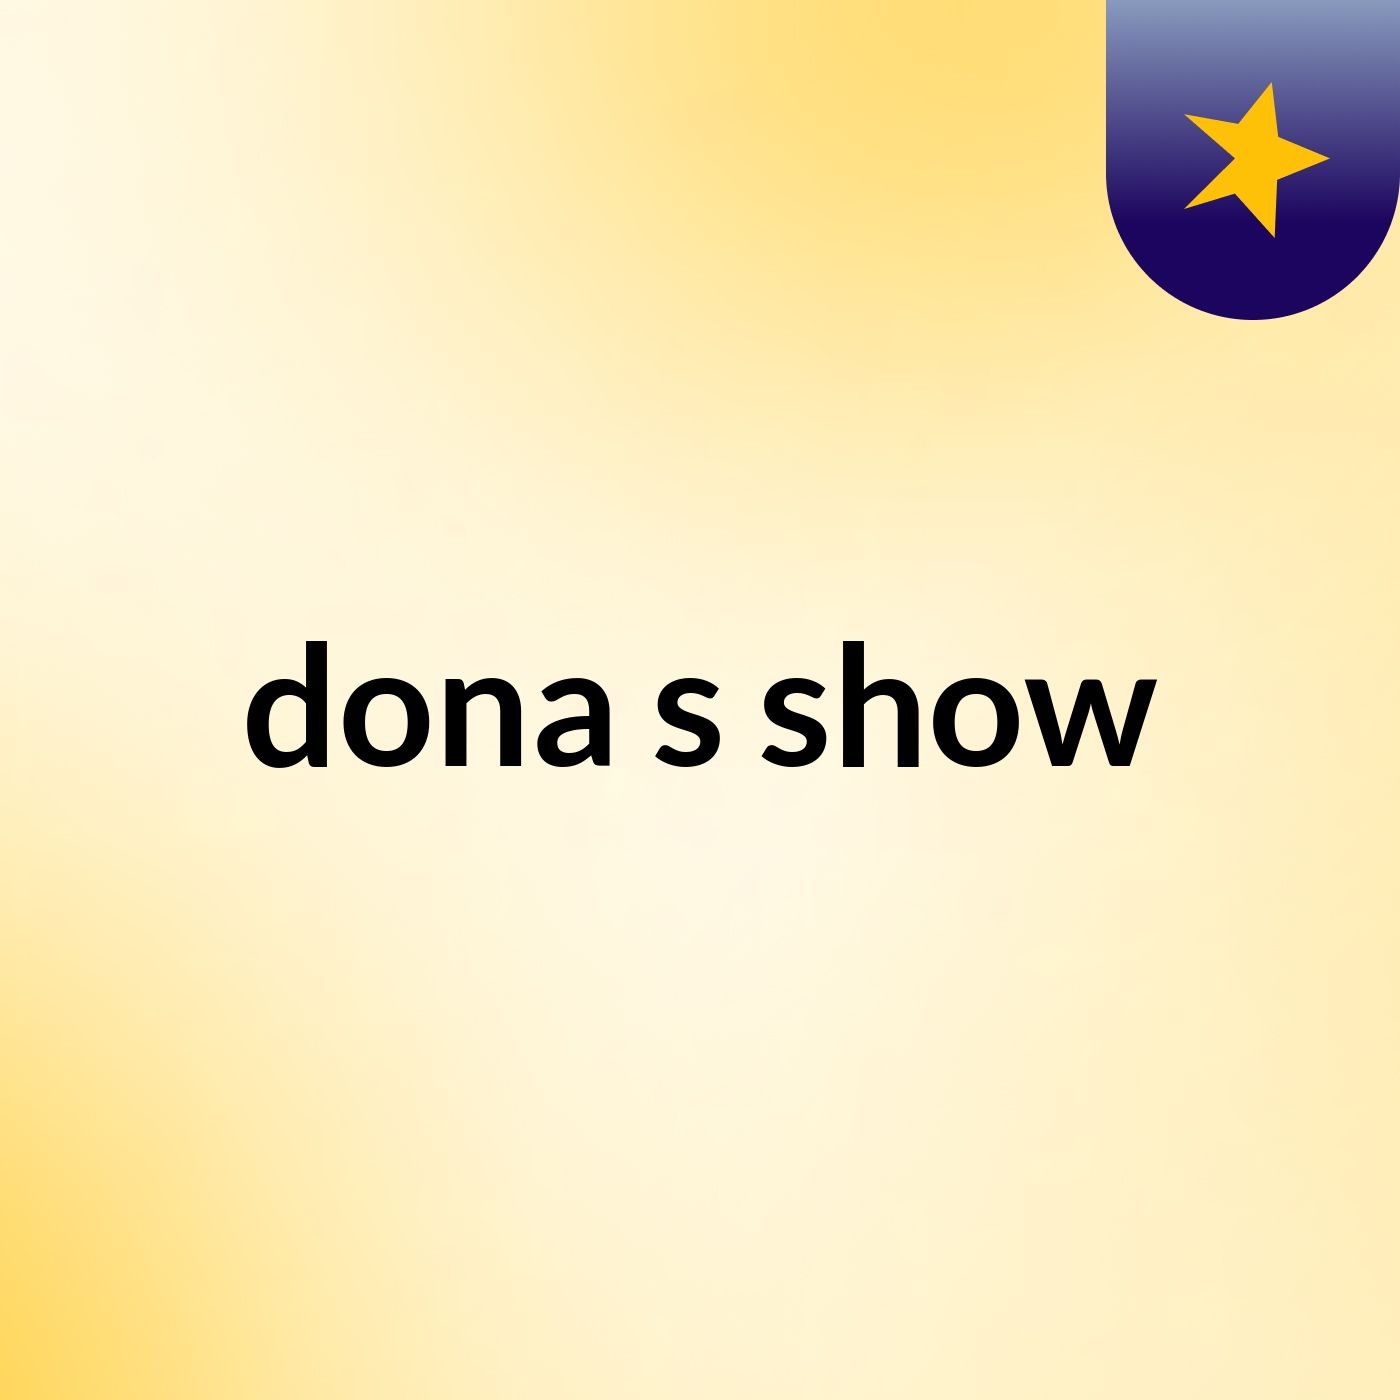 dona's show